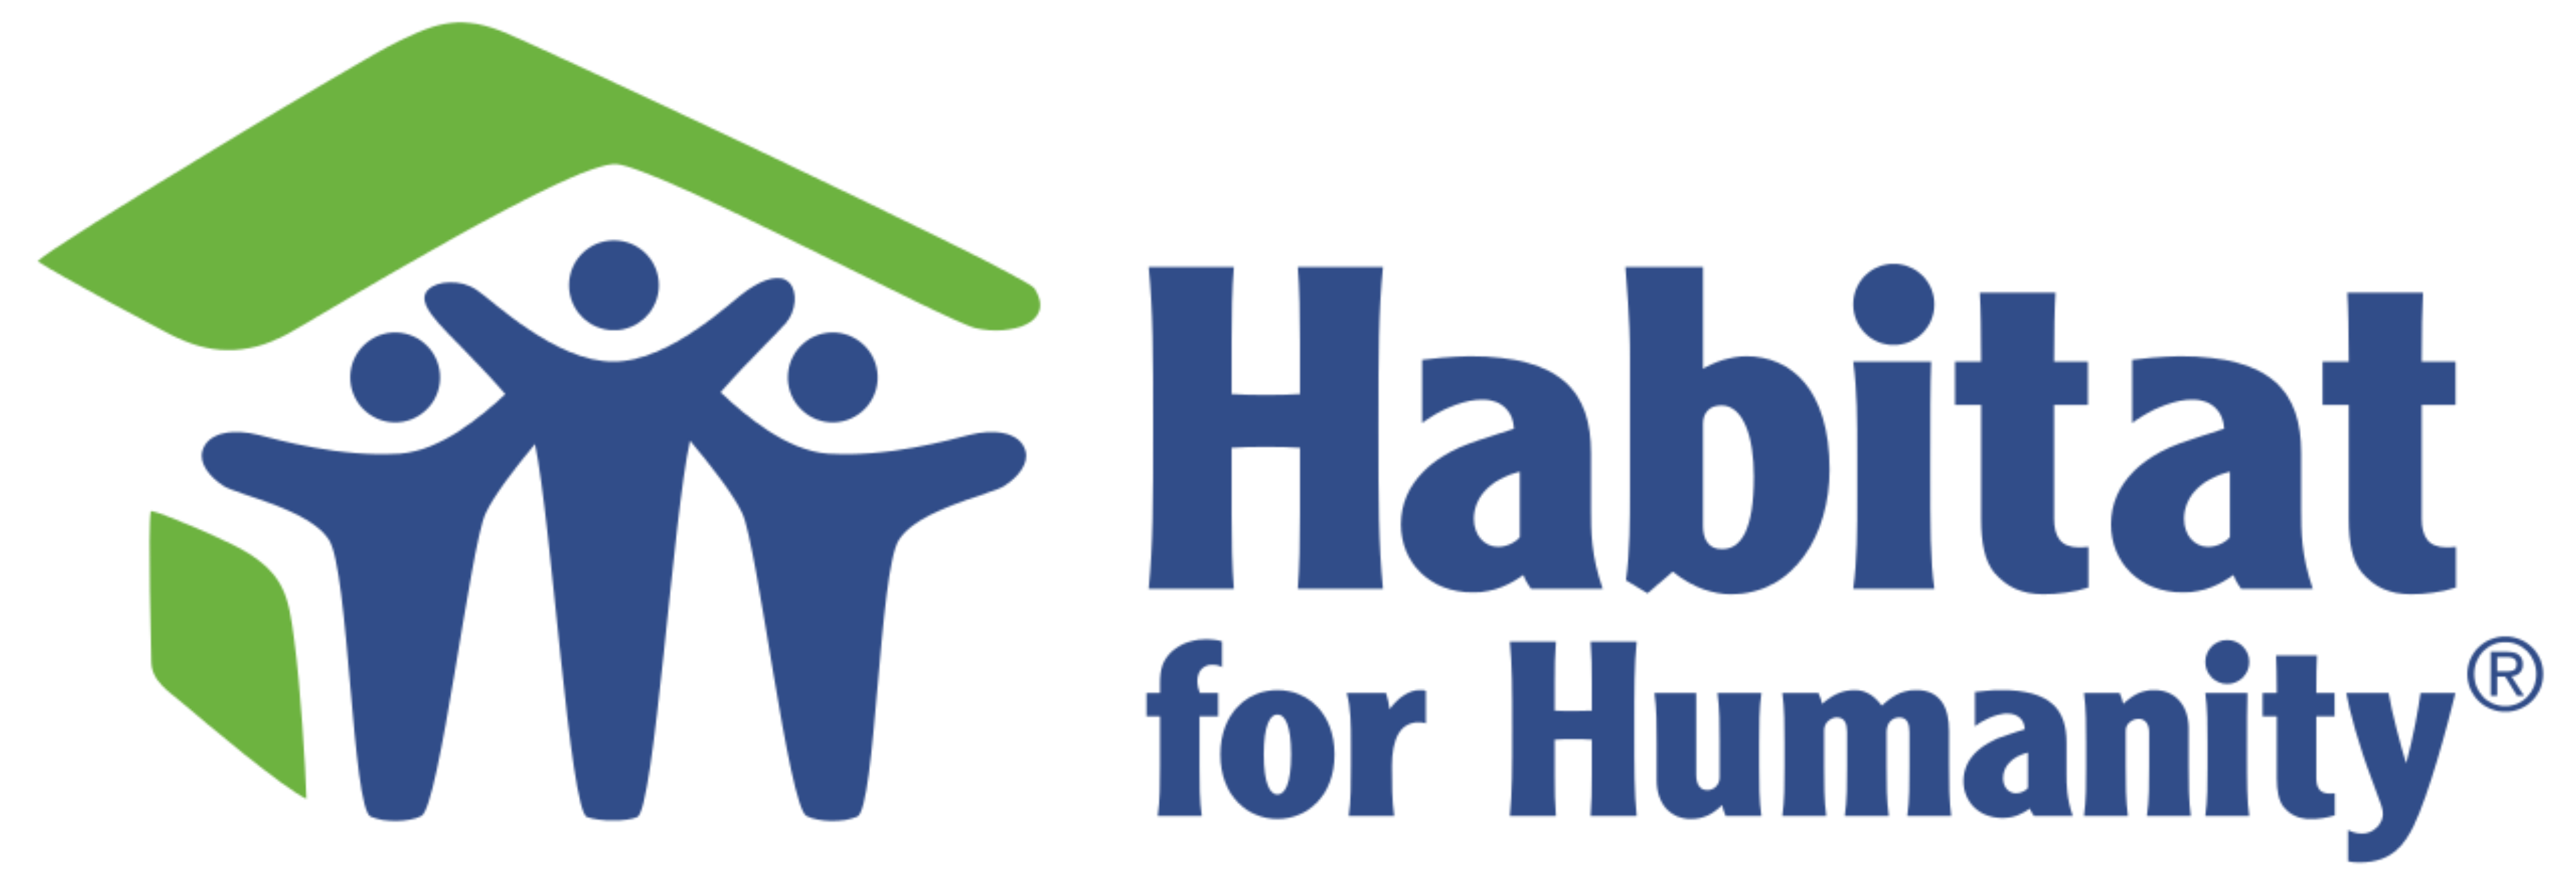 Big Bend Habitat for Humanity logo